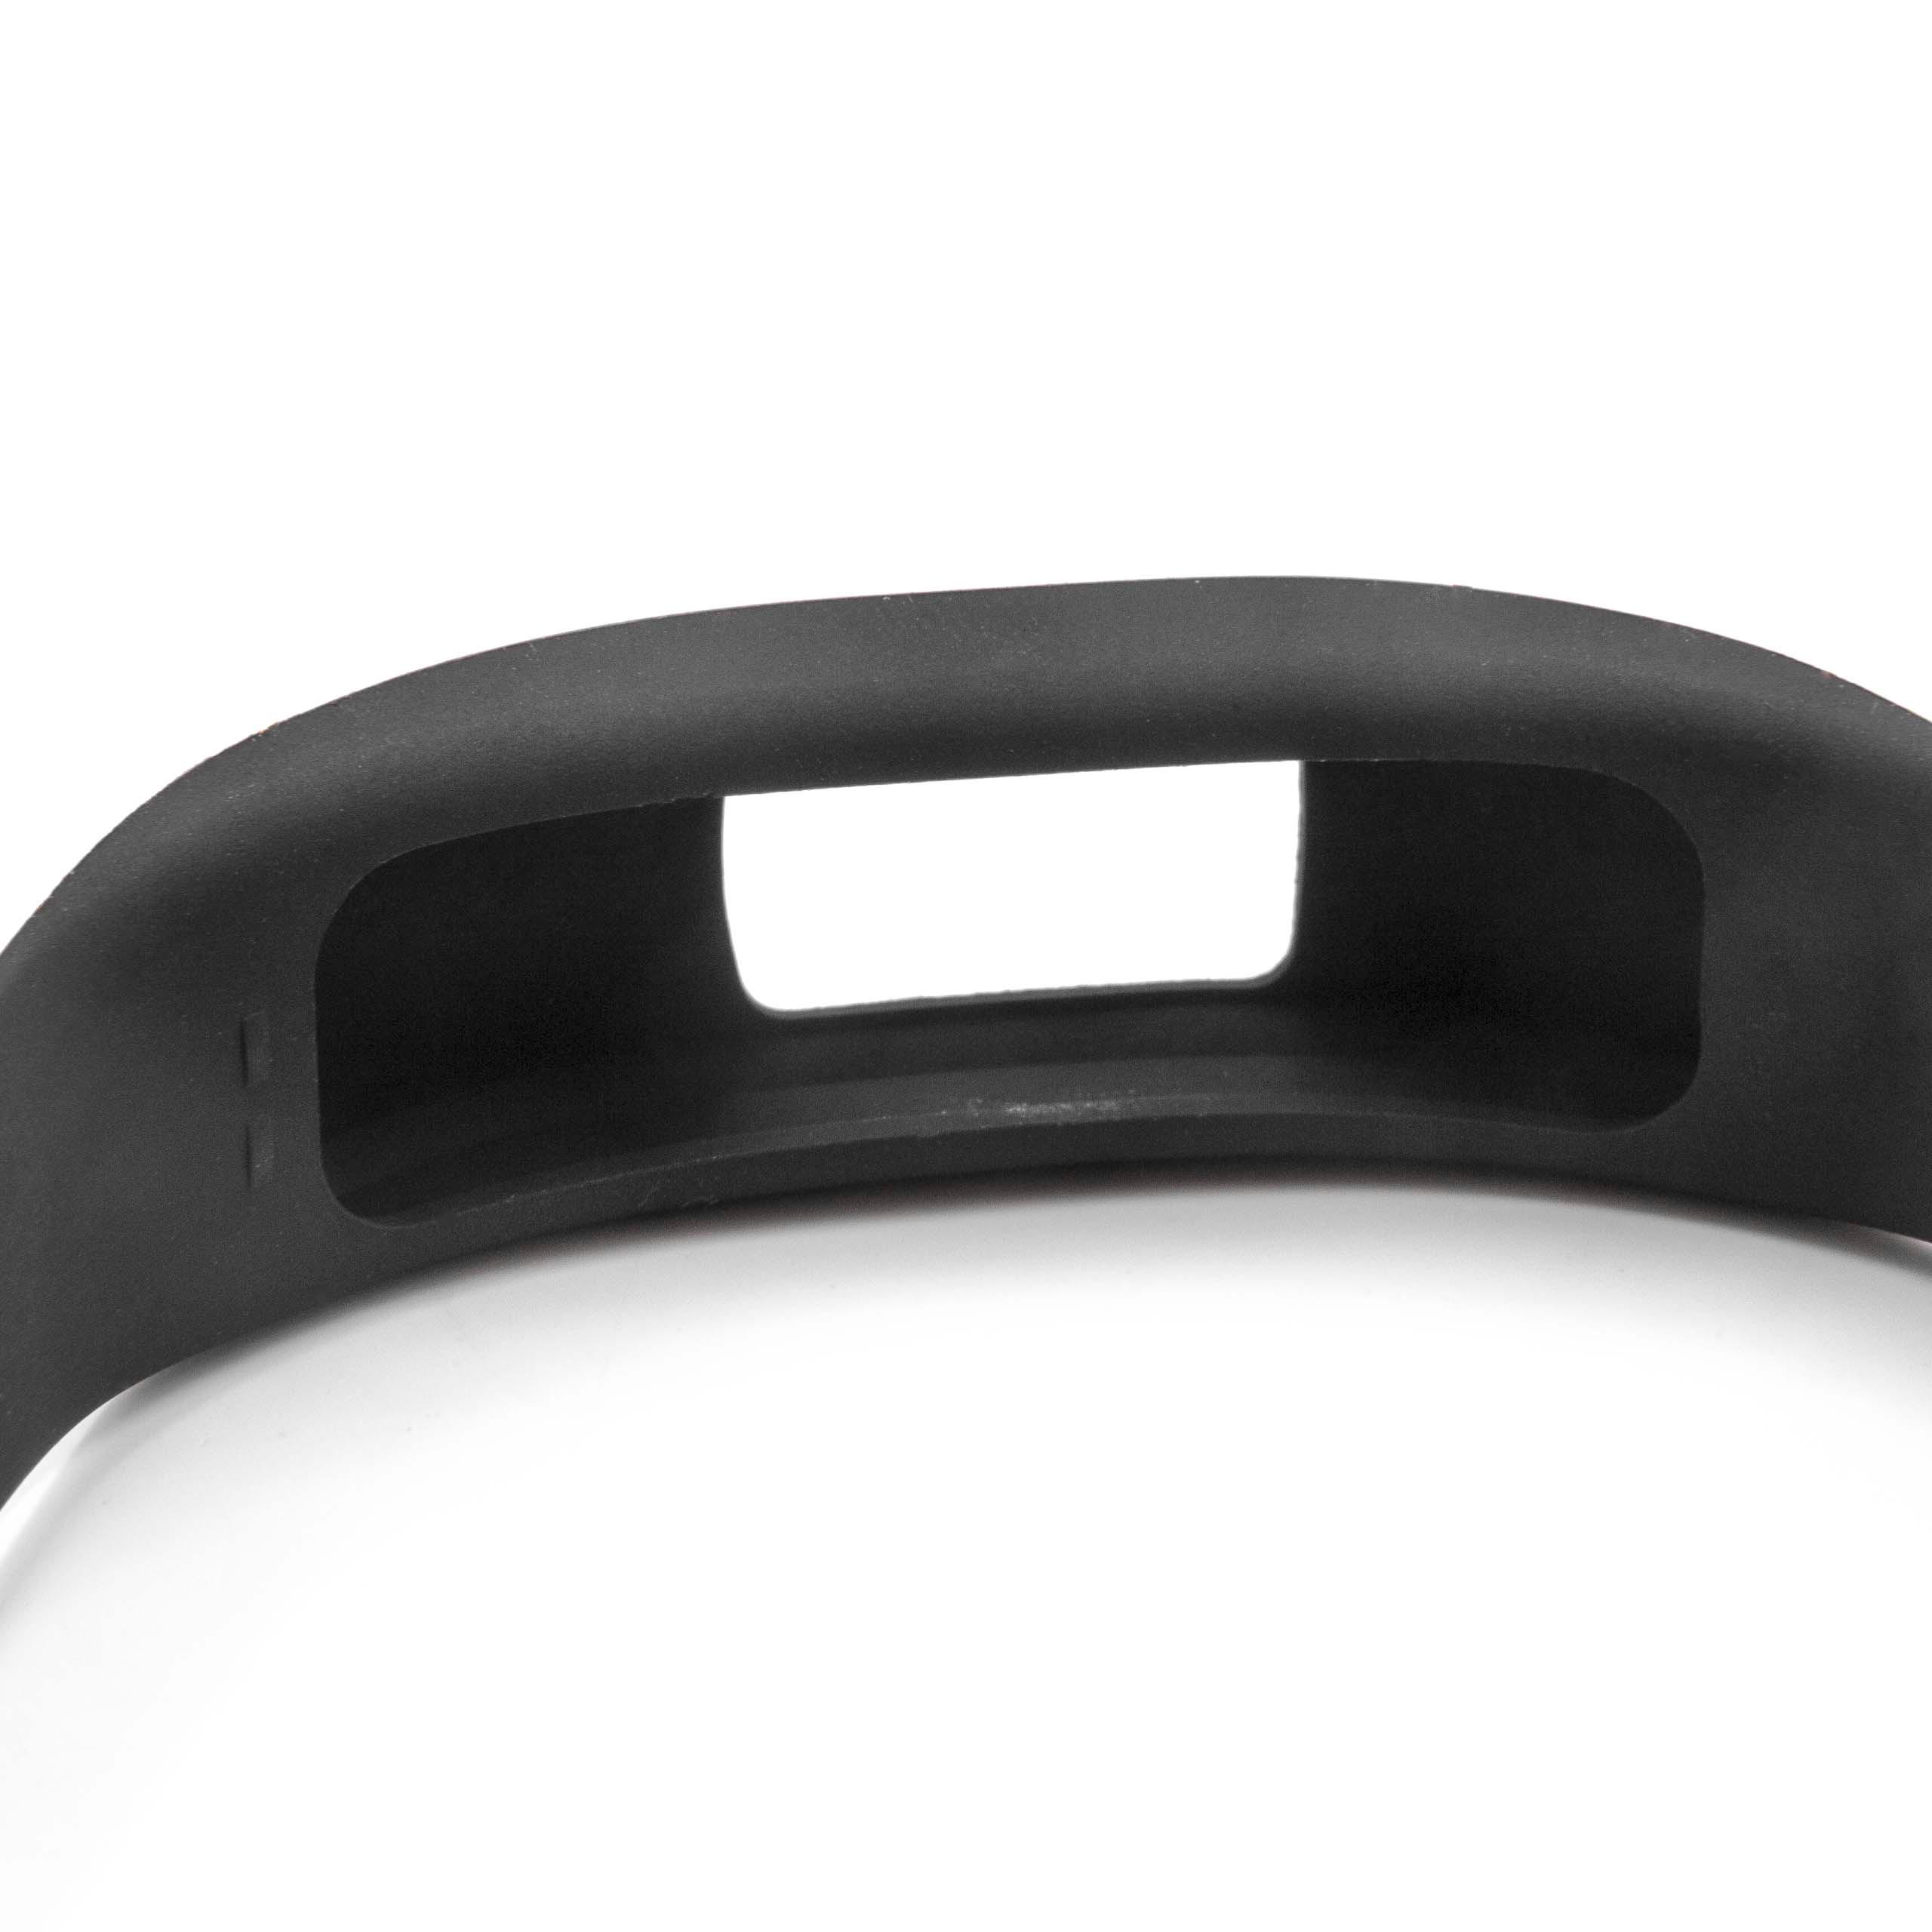 Pasek do smartwatch Garmin Vivofit - dł. 23 cm, szer. 18 mm, silikon, czarny